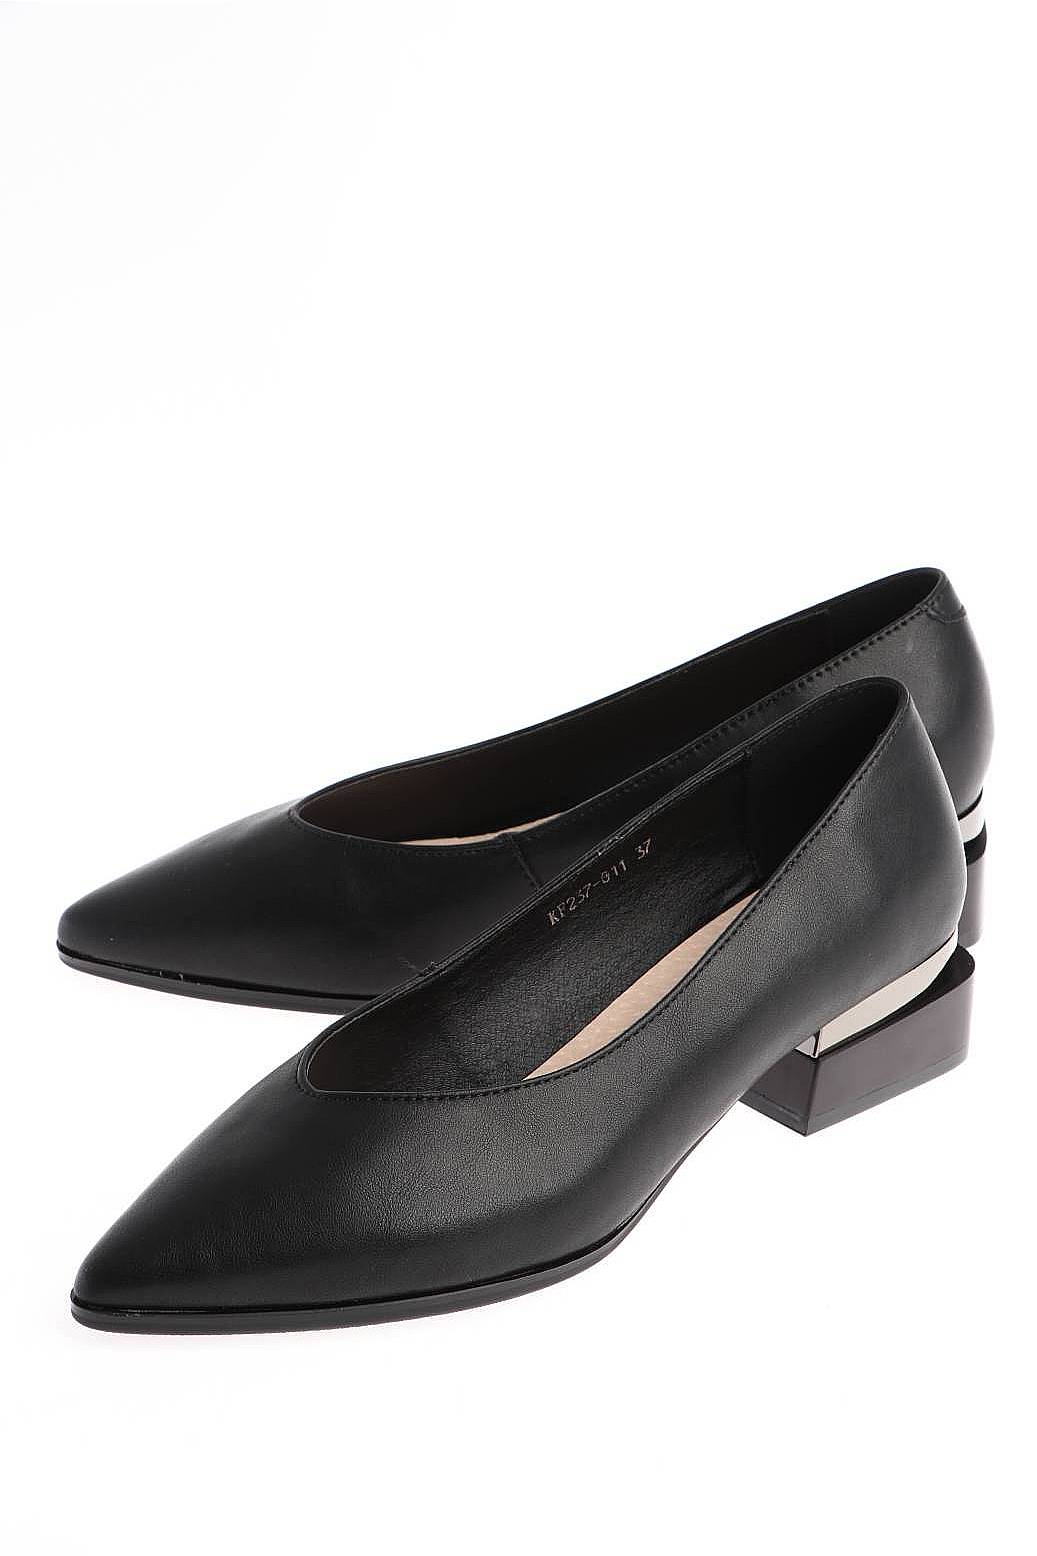 Туфли женские Benetti KF237-011 черные 39 RU